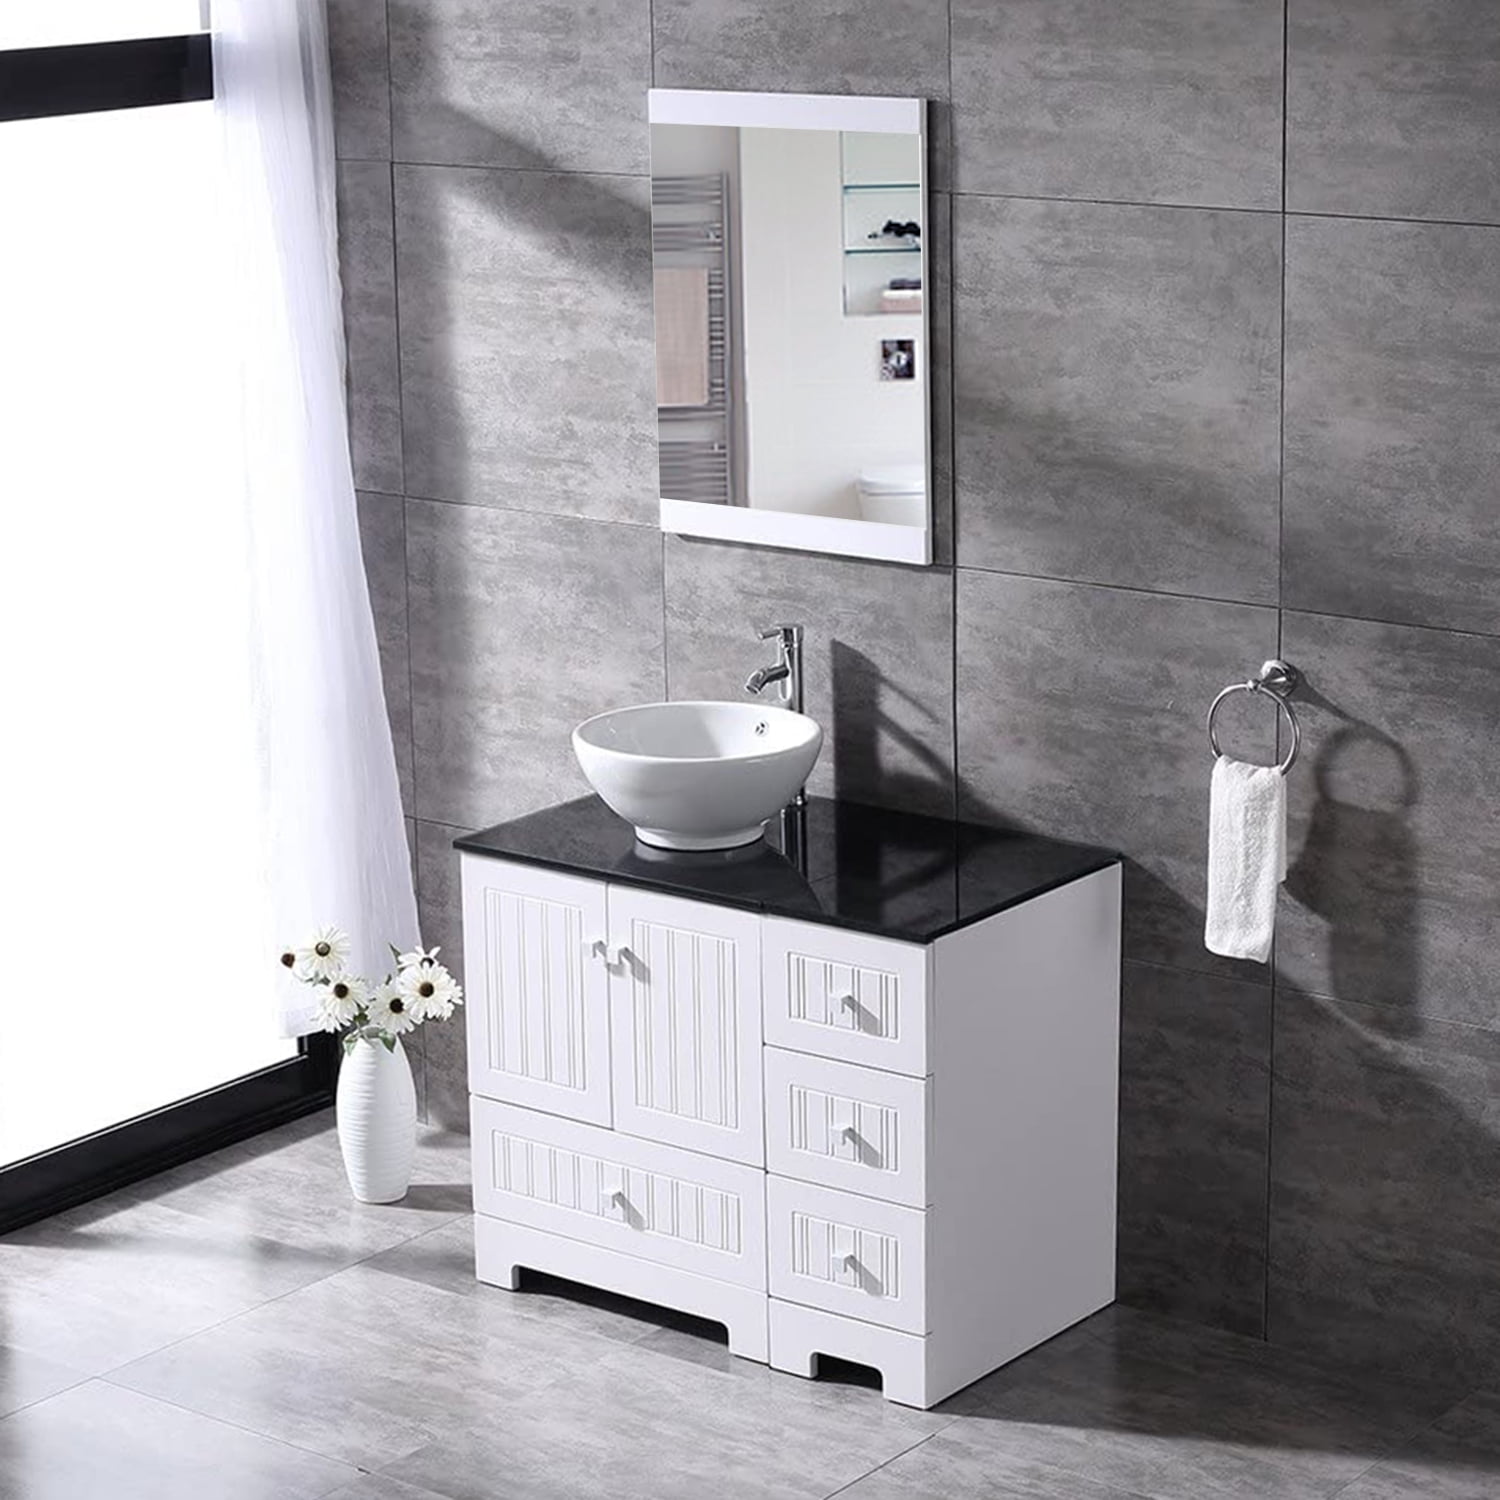 36" Black Bathroom Vanity Mirror Cabinet Set Vessel Glass Ceramic Sink Faucet US 